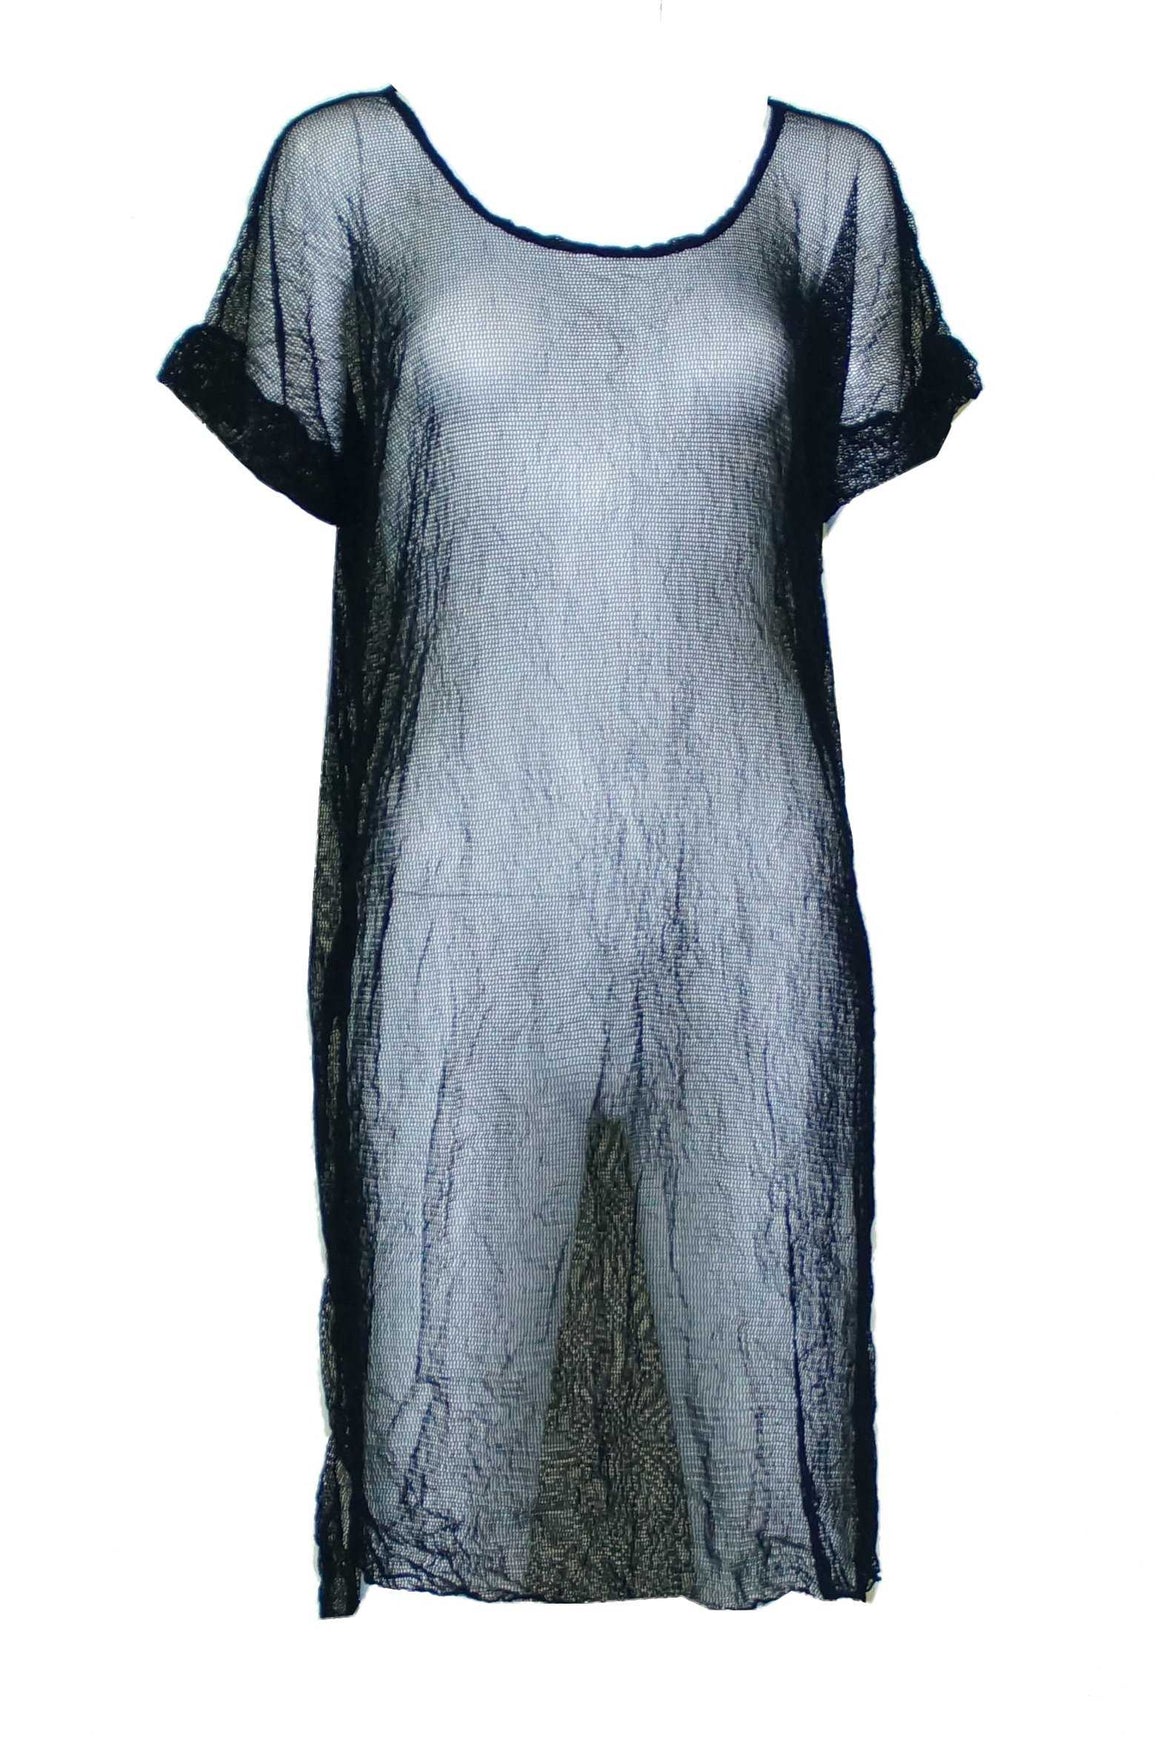 open mesh dress in Khaki with Open mesh long cardi in Black